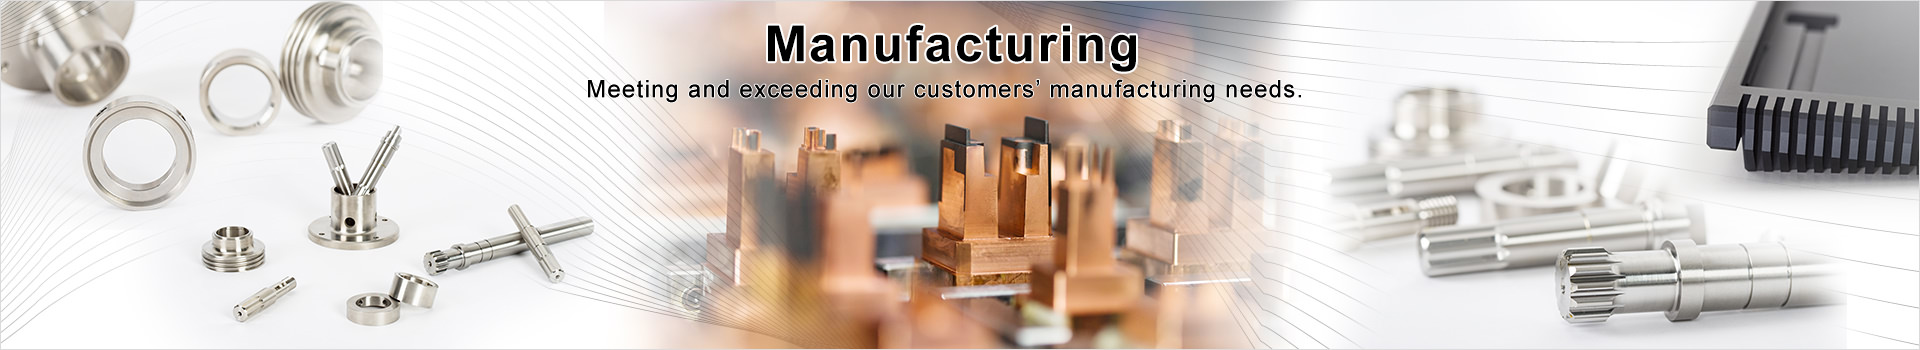 Manufacturing|Manufacturing service|Customized manufacturing service|Customized manufacturing